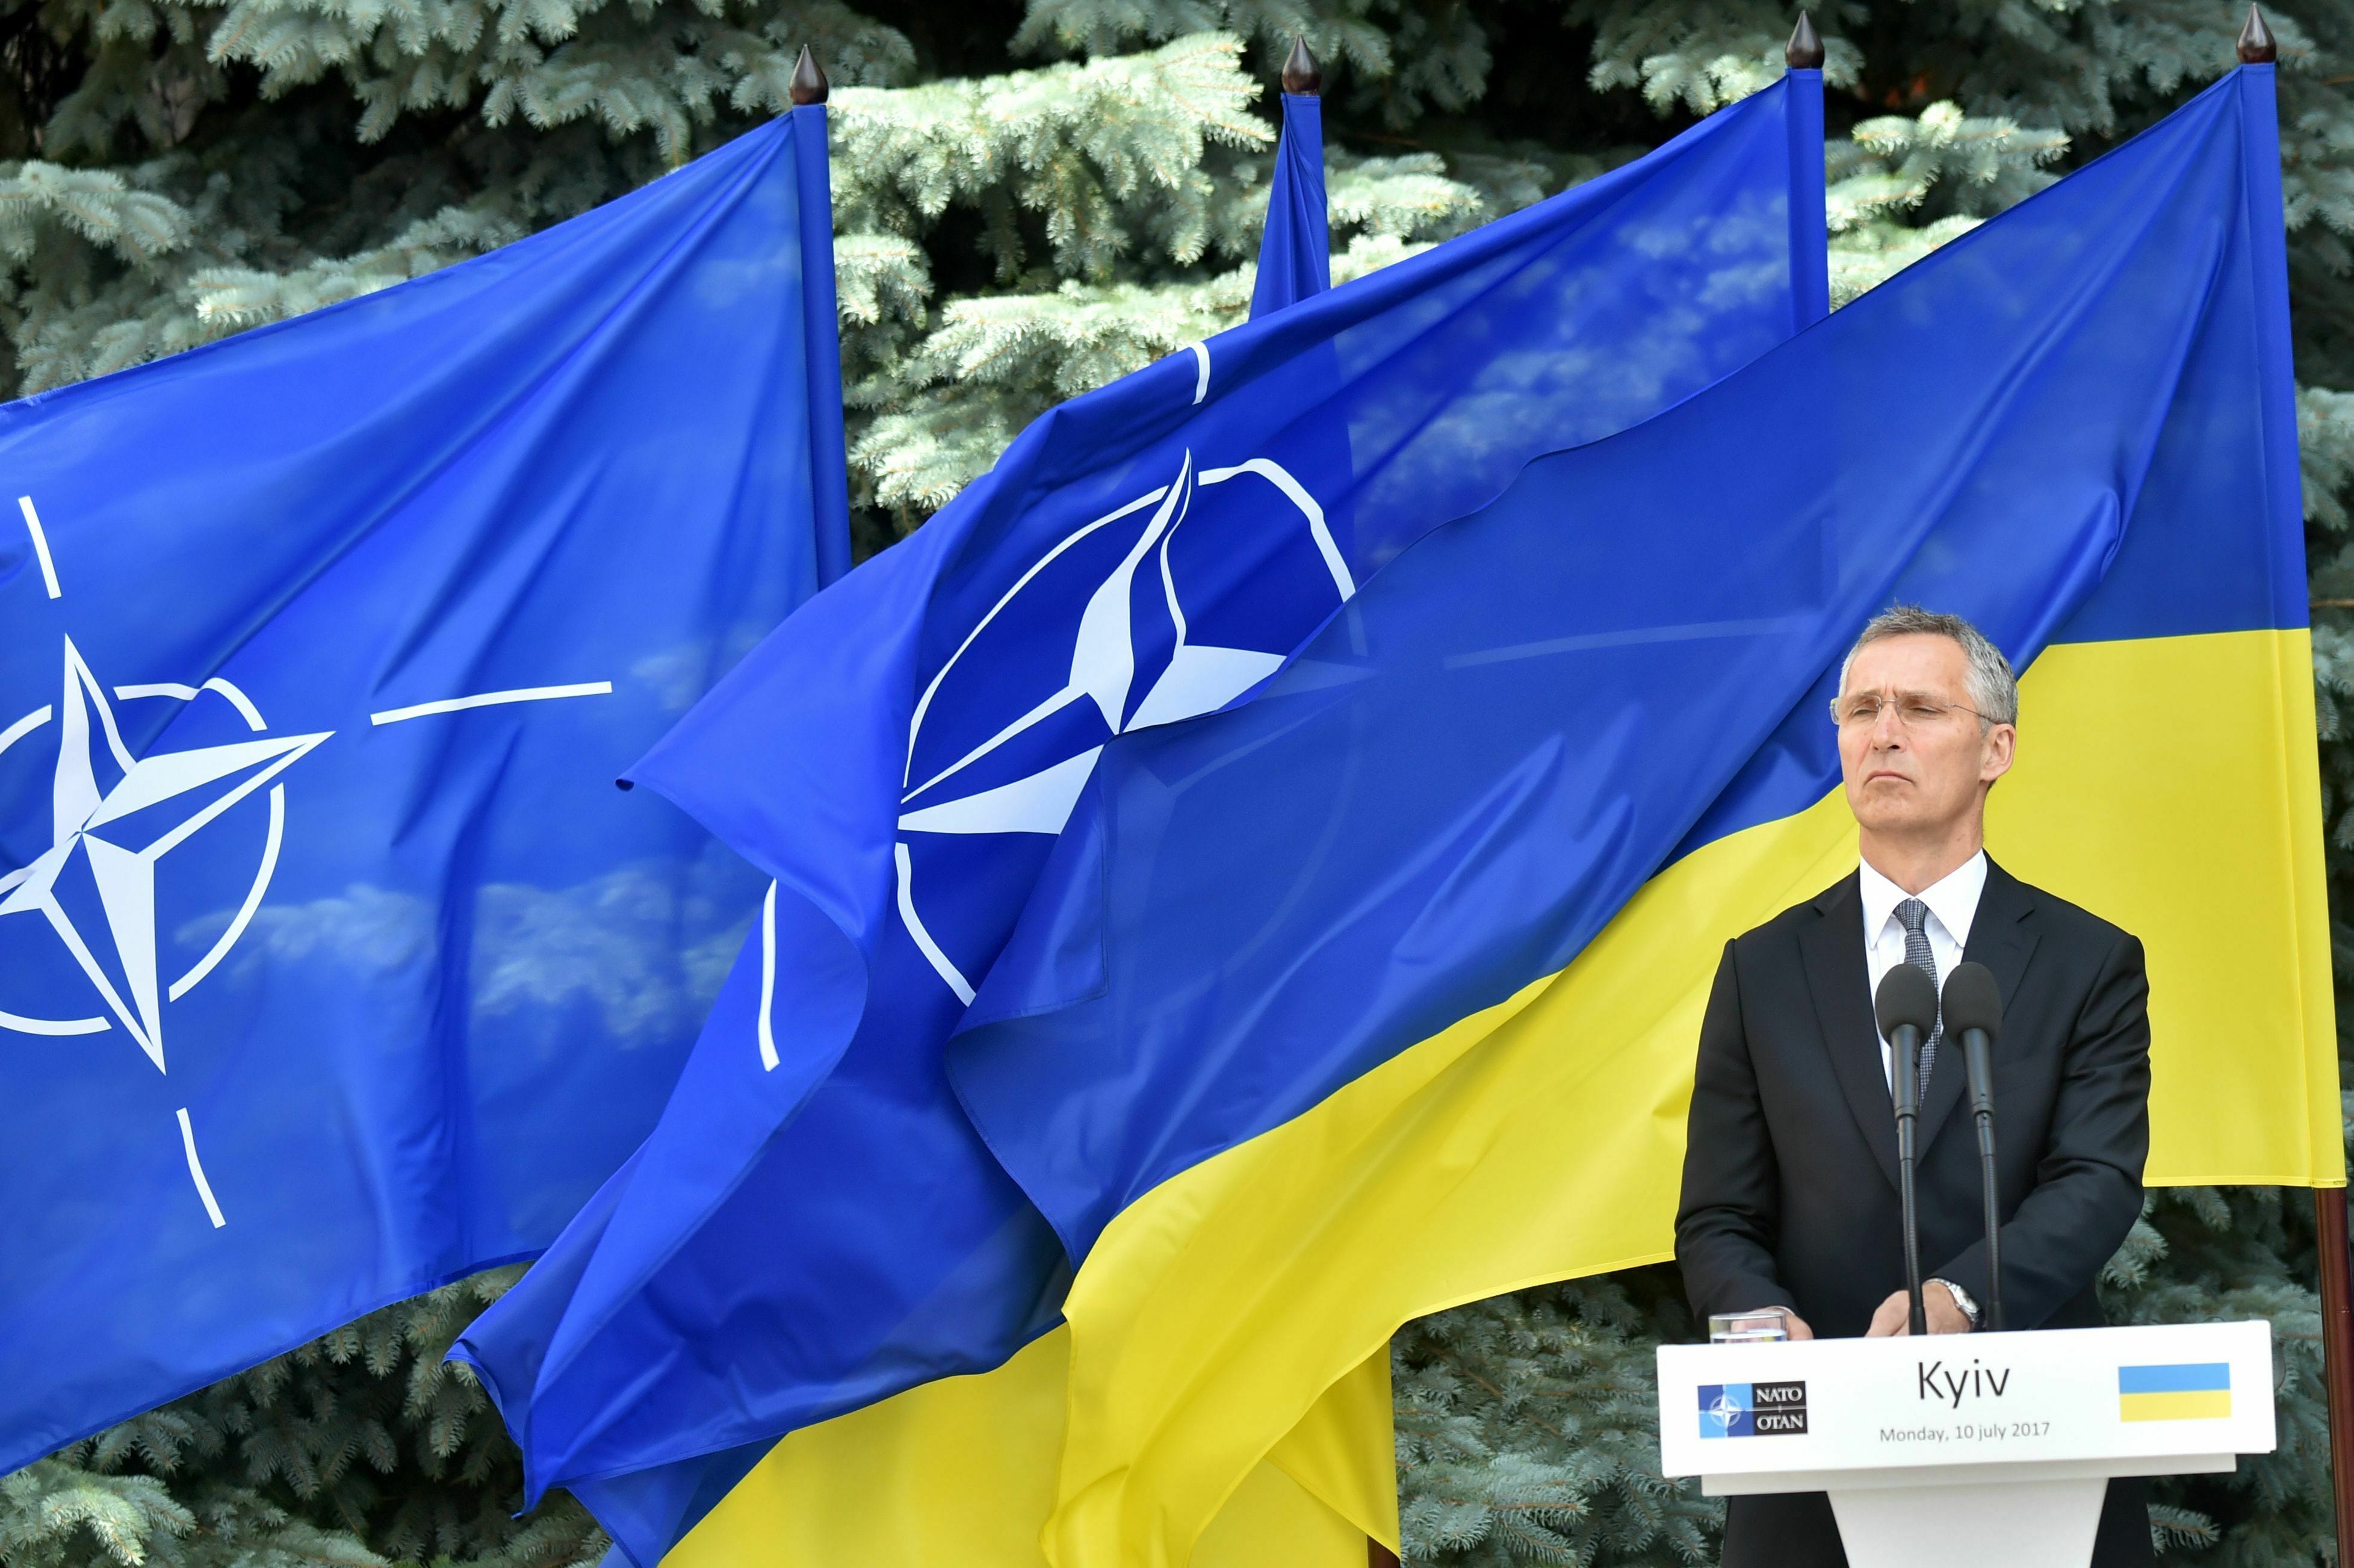 Членство молдавии в нато. Флаг Украины и НАТО. Украина НАТО. Флаг Украины ЕС НАТО. Зеленский с флагом НАТО И Украины.